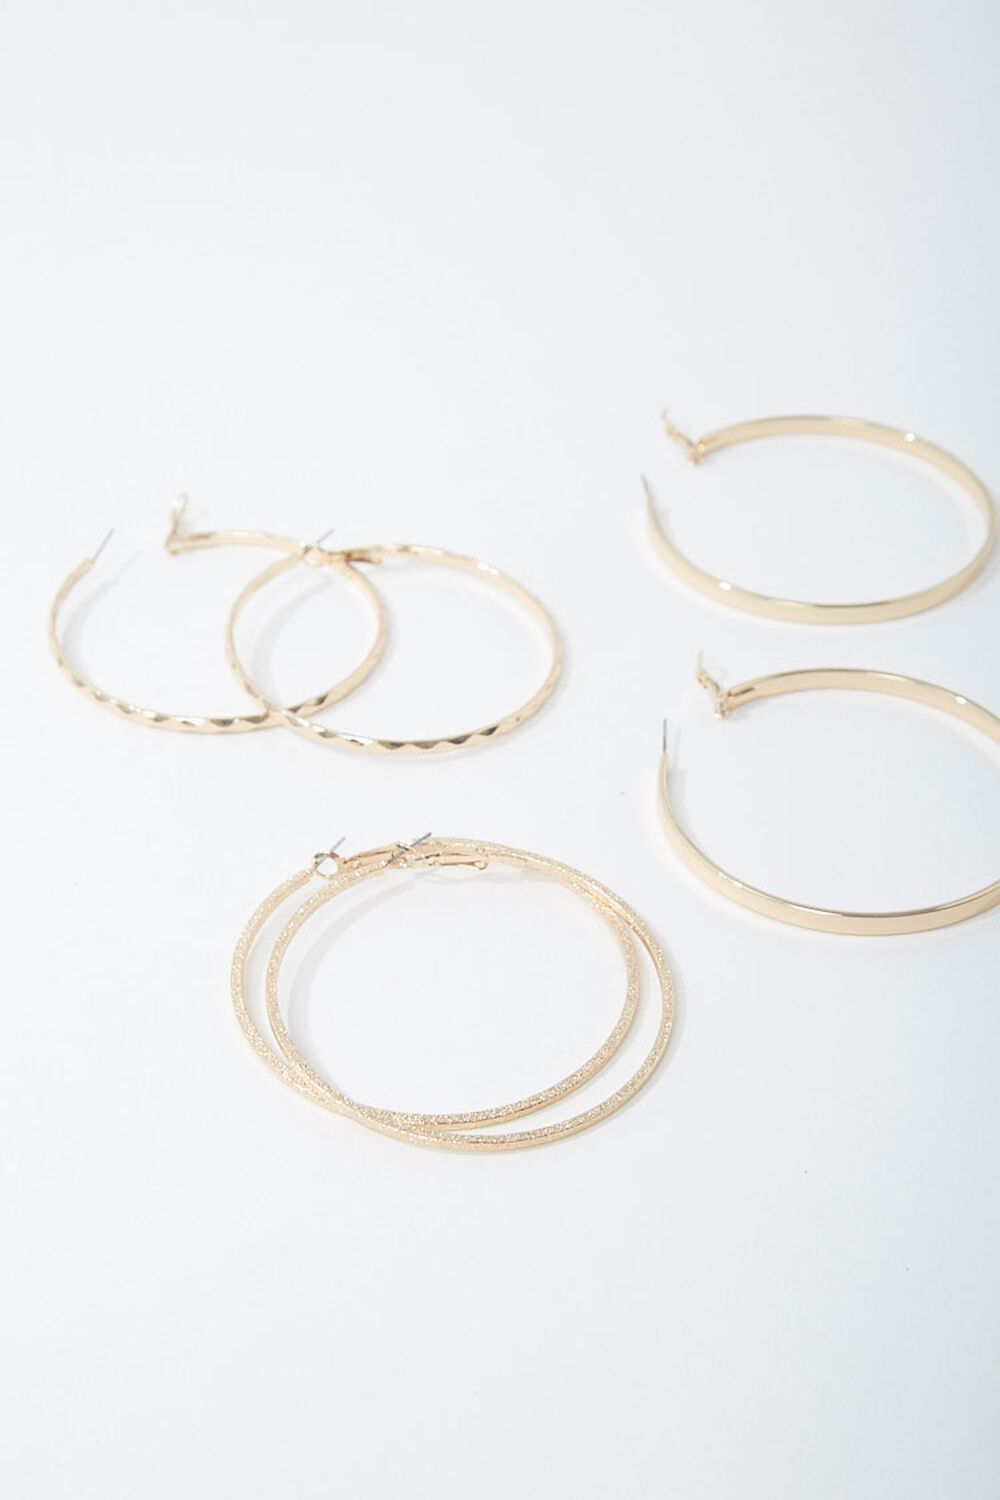 GOLD Assorted Hoop Earring Set, image 2